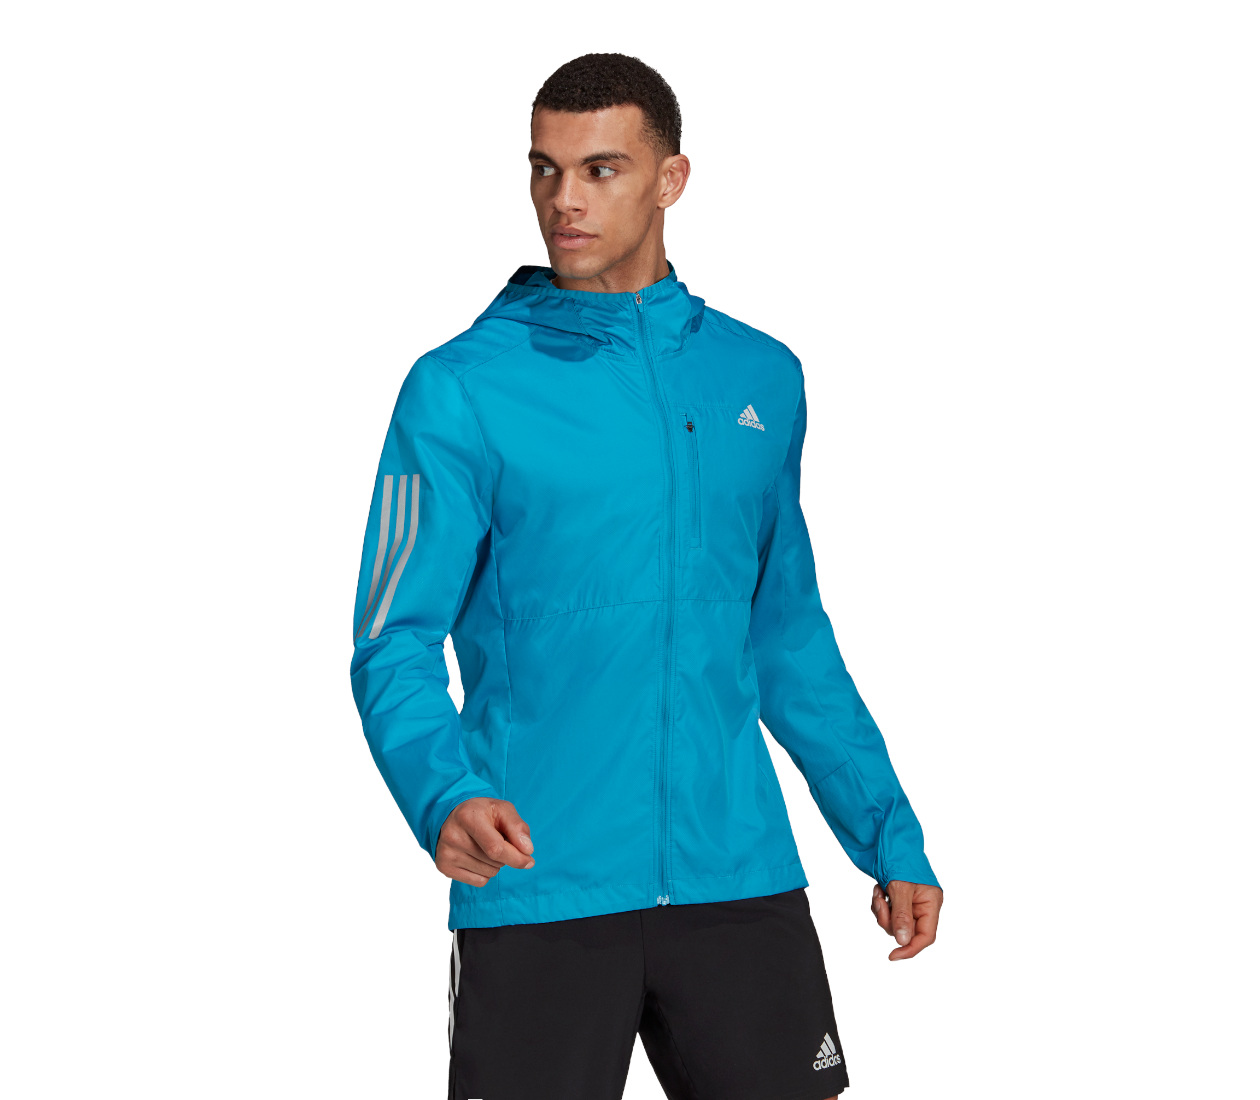 Adidas Own The Run Jacket (M) giacca da running impermeabile | LBM SPort